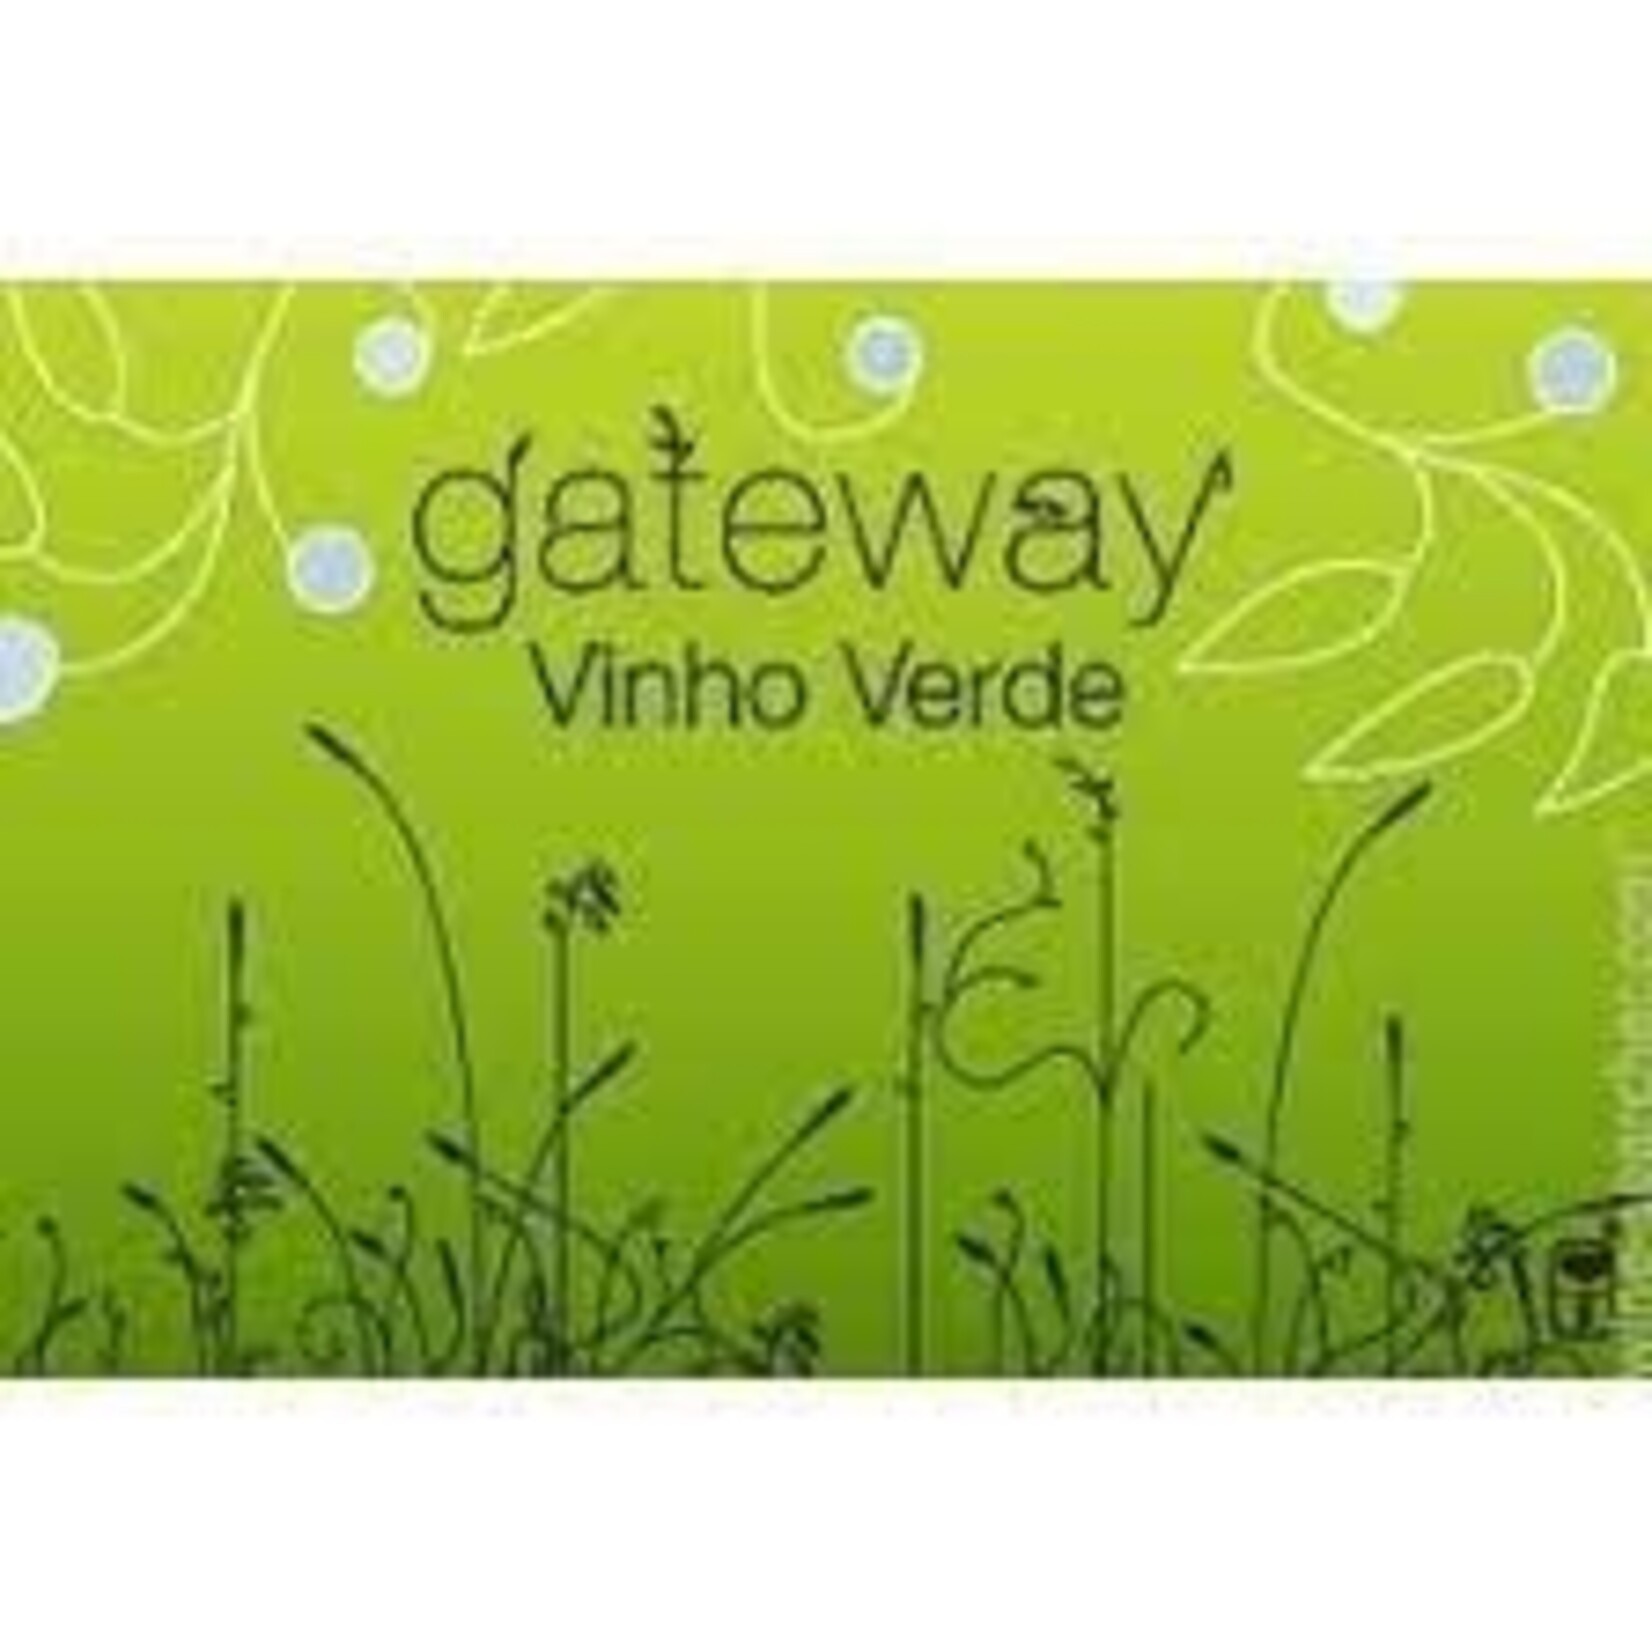 Boutique Wine Collection Gateway Vinho Verde 2021,  Portugal